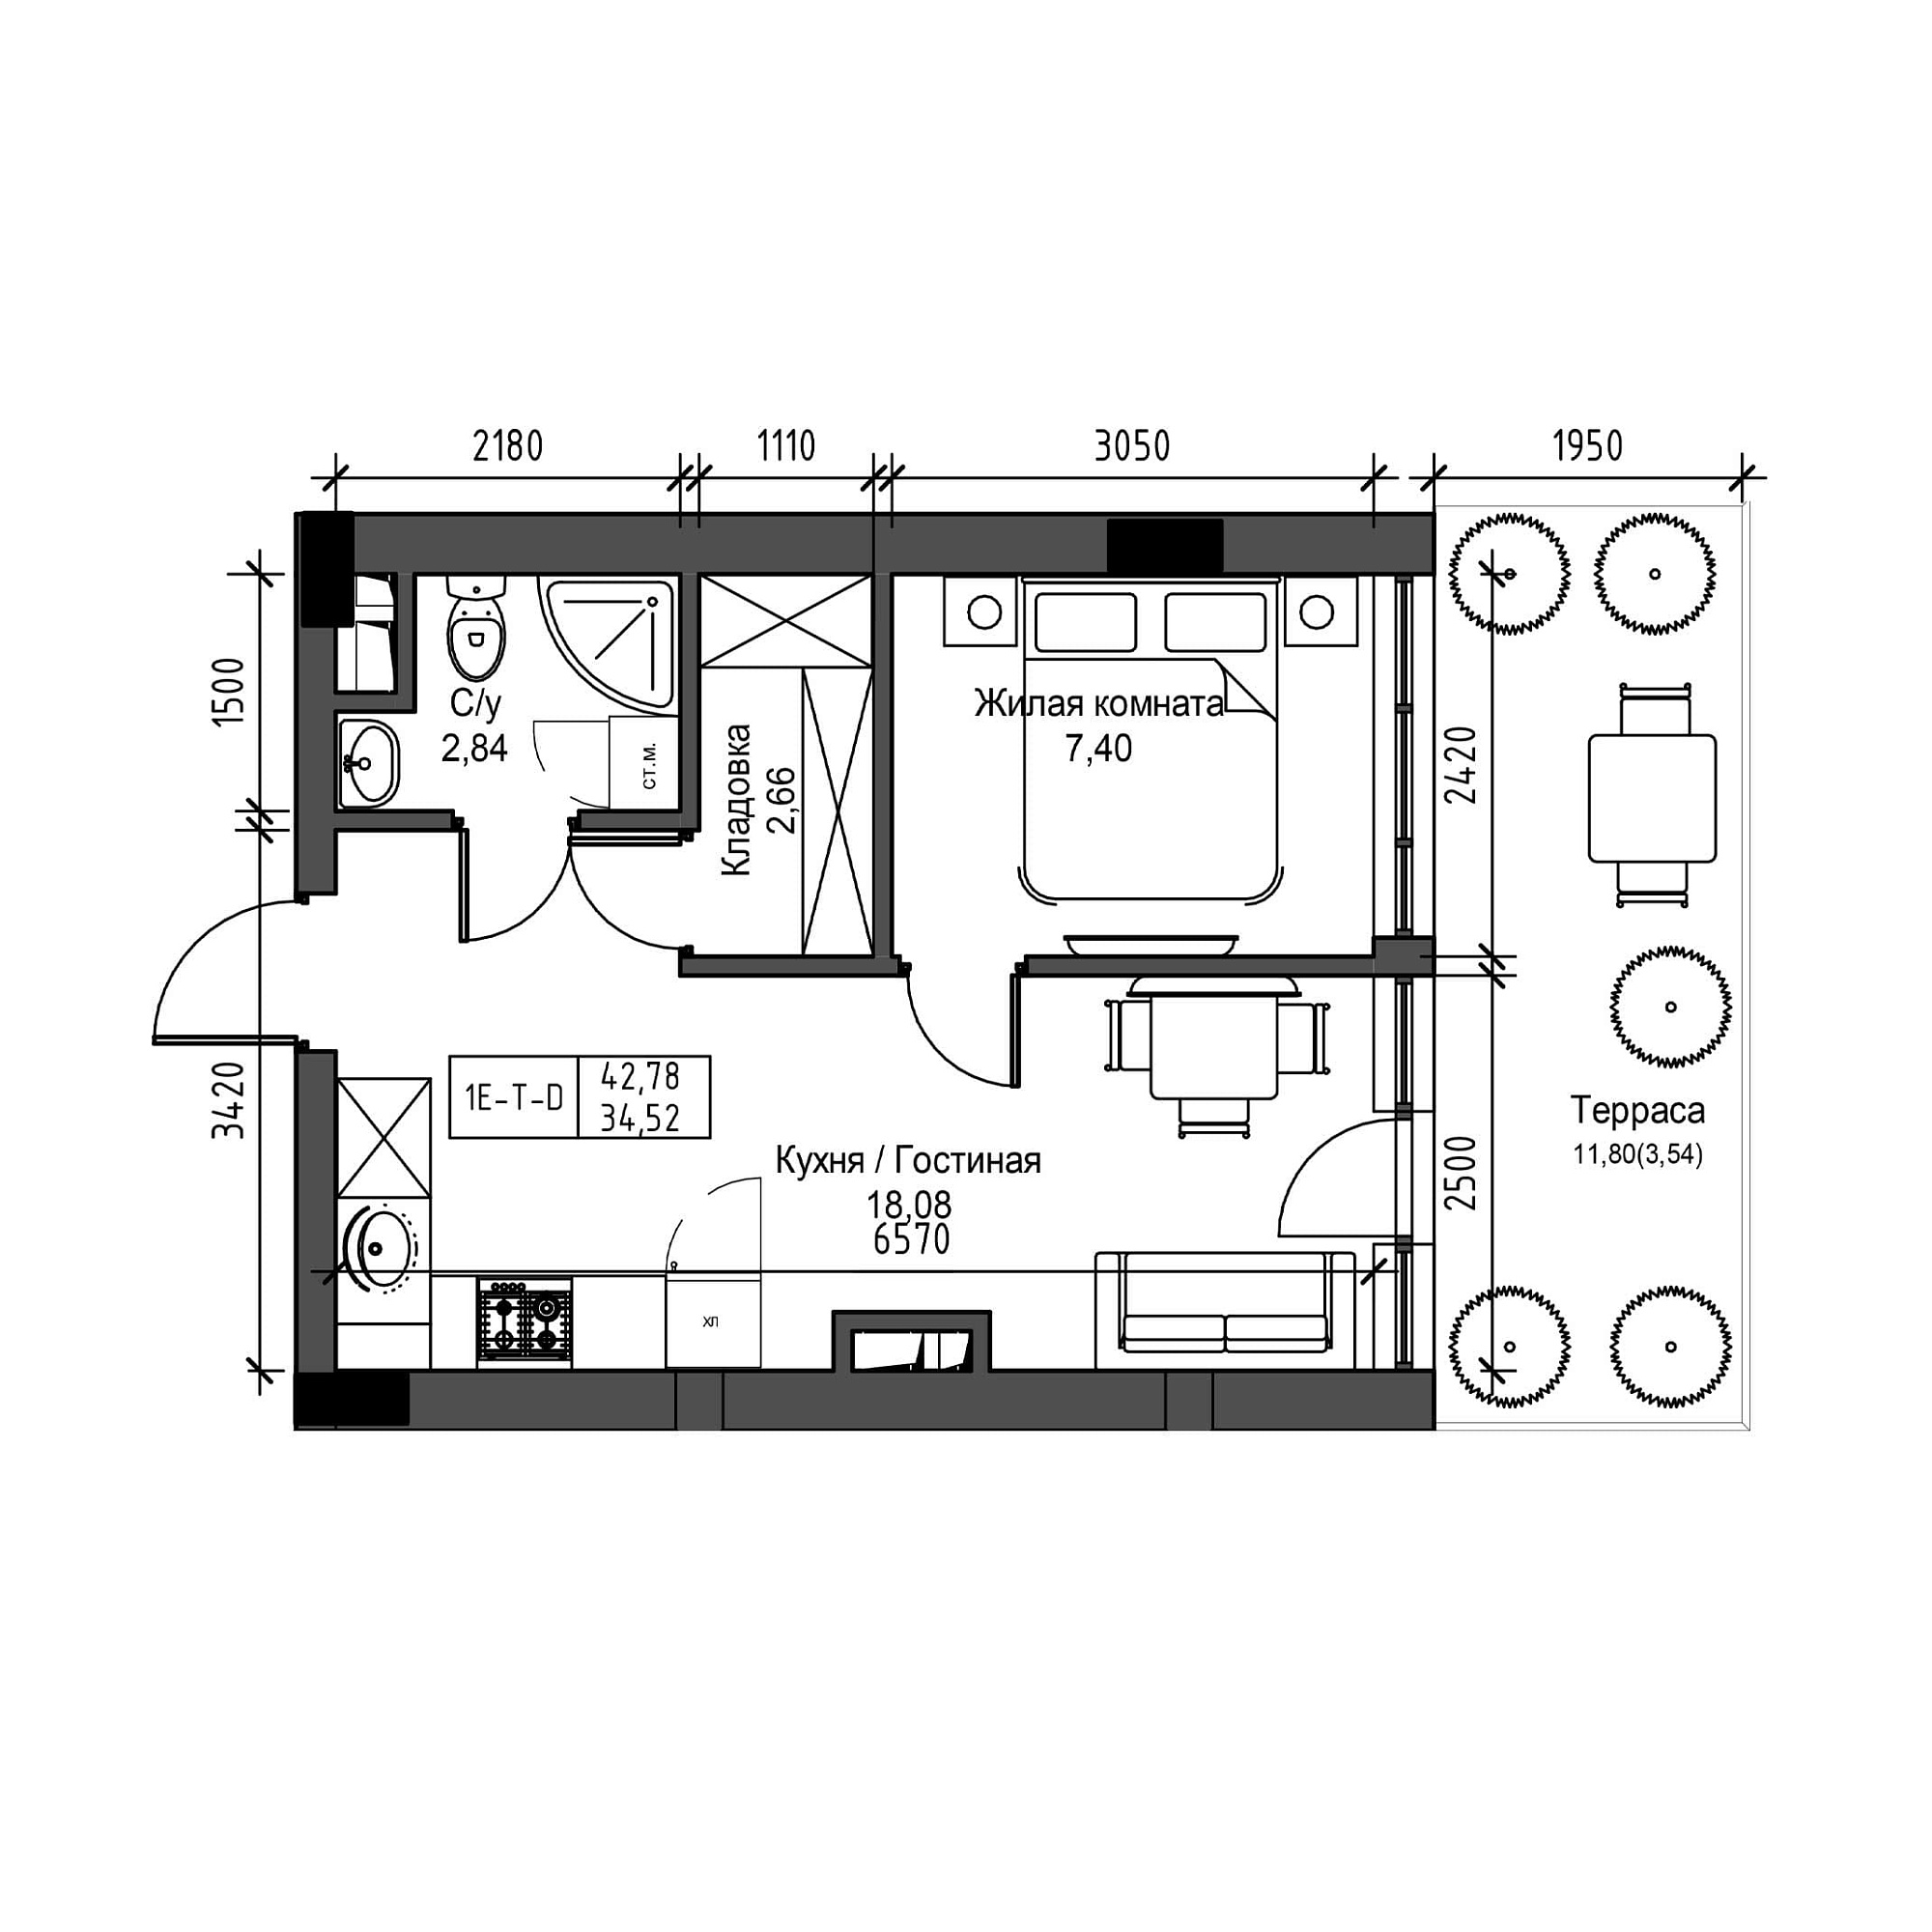 Планування 1-к квартира площею 34.52м2, UM-001-03/0003.